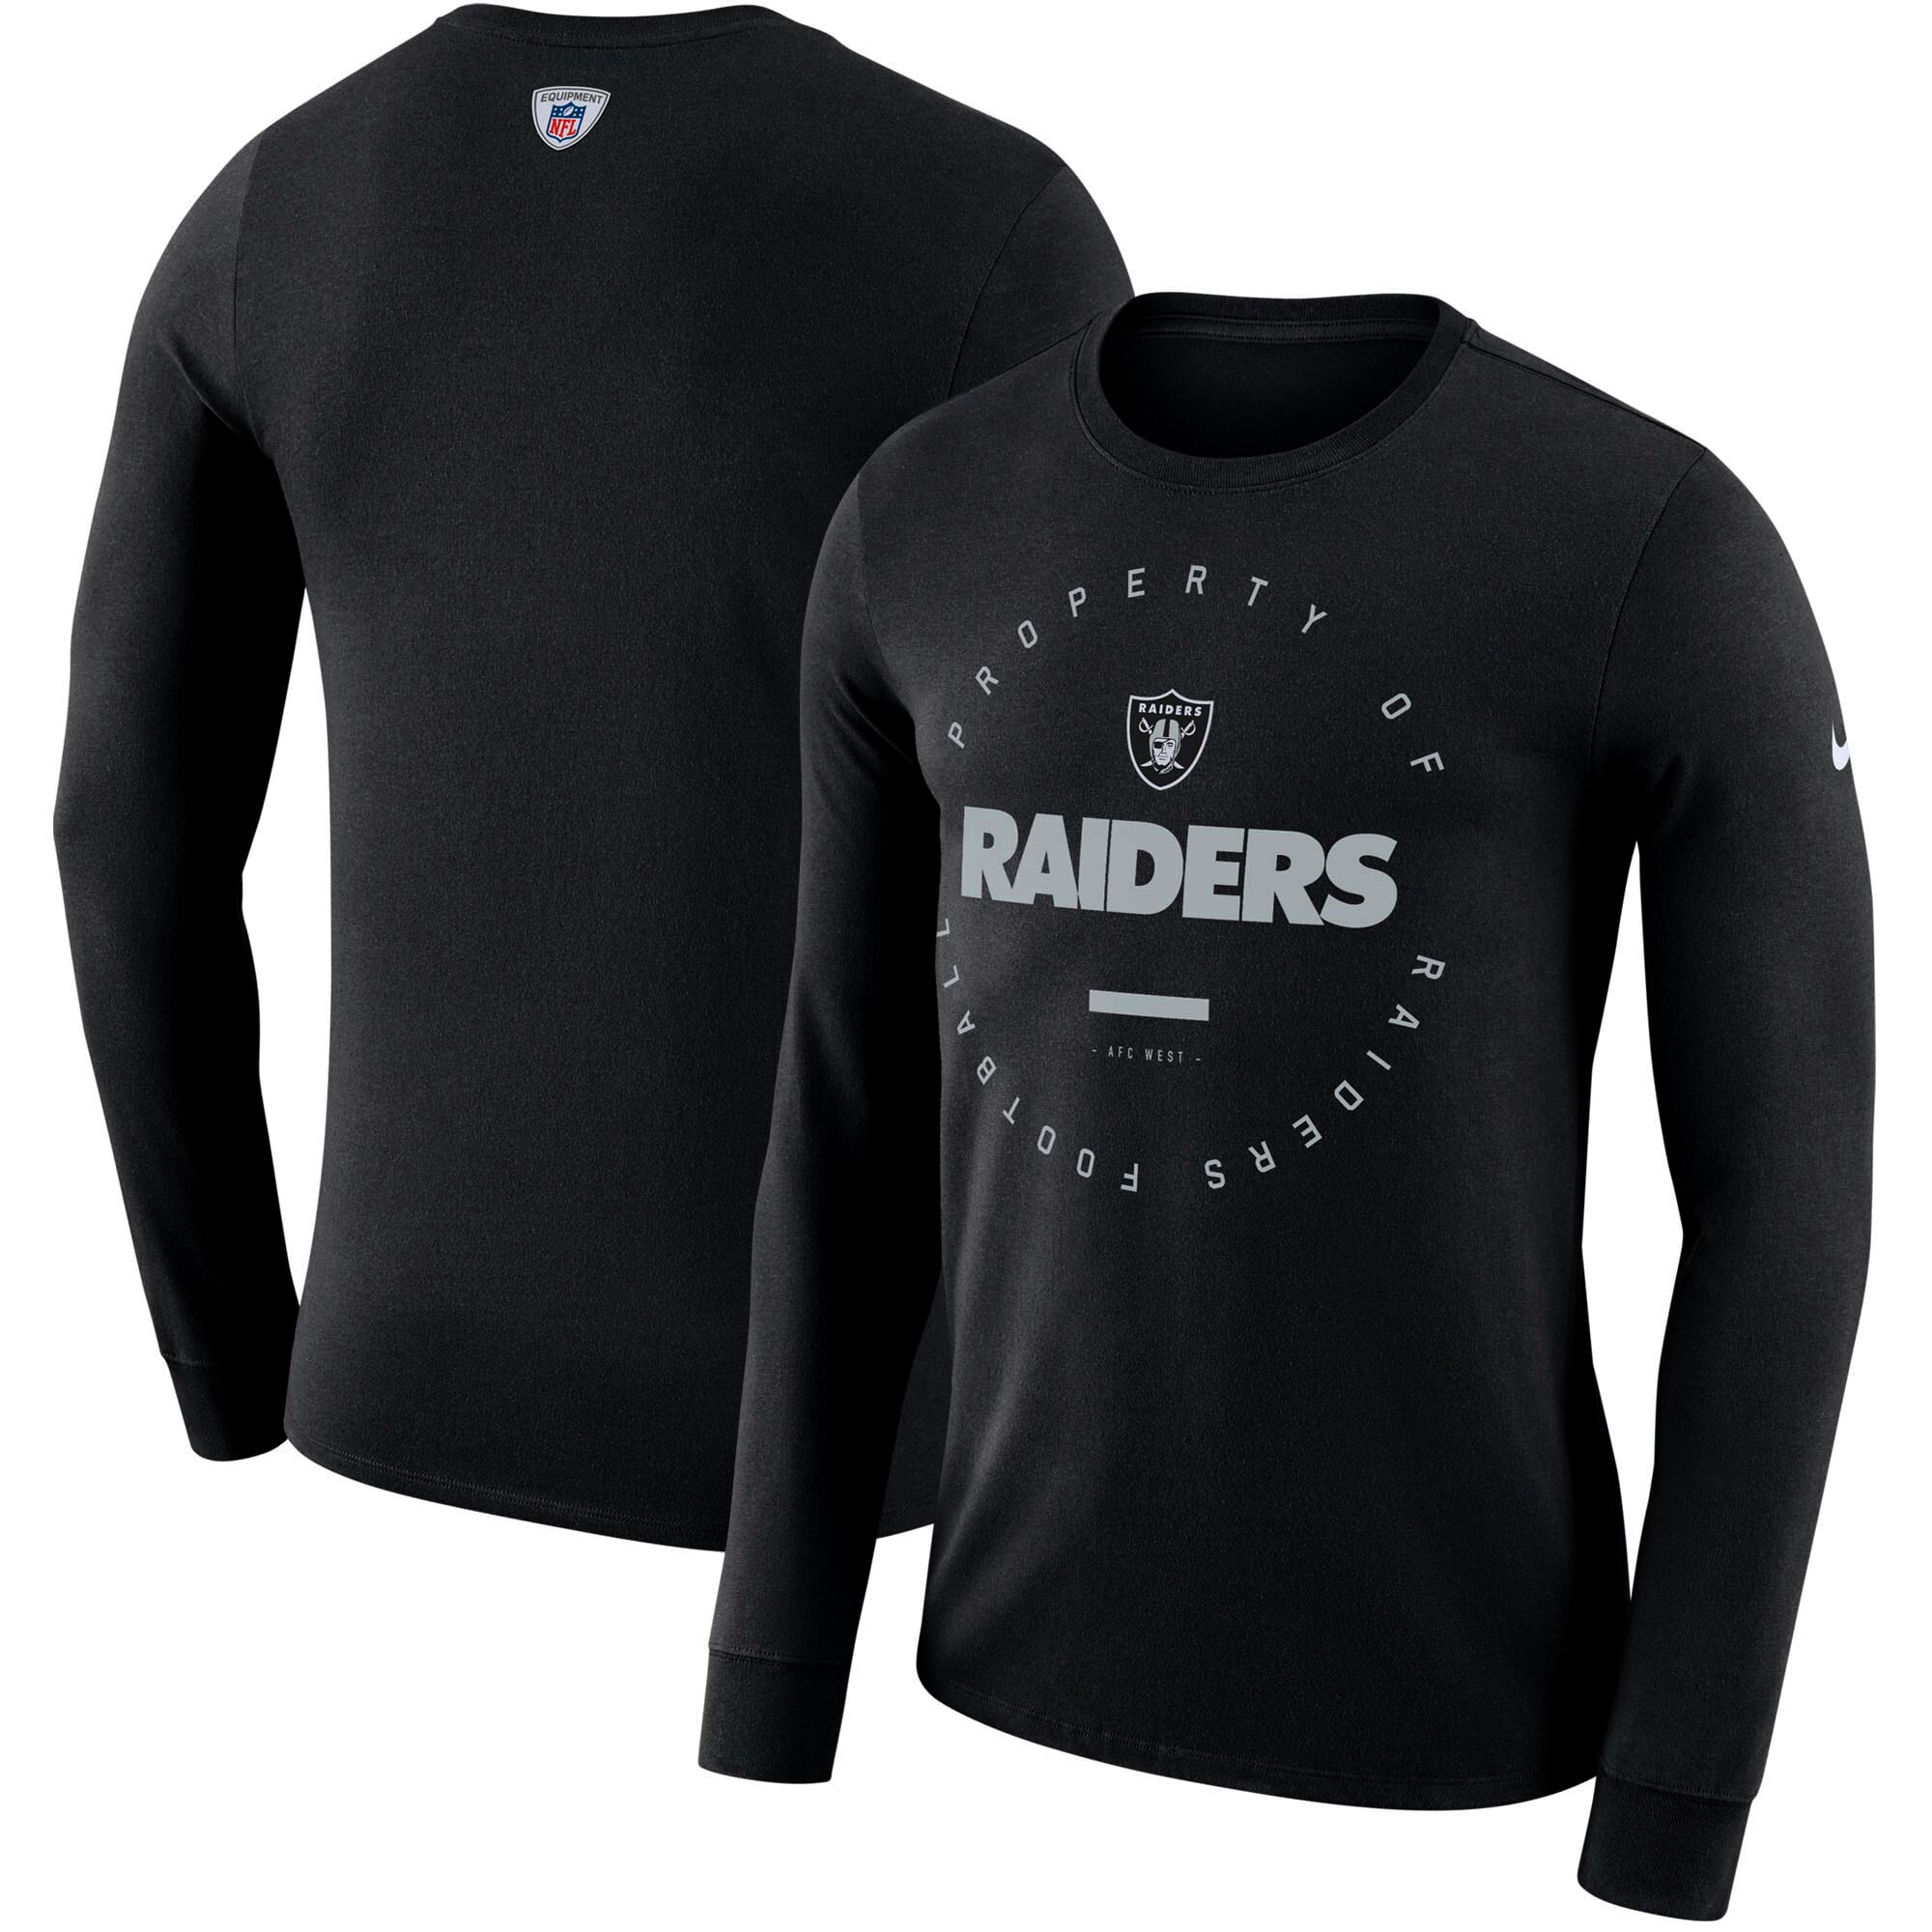 raiders compression shirt